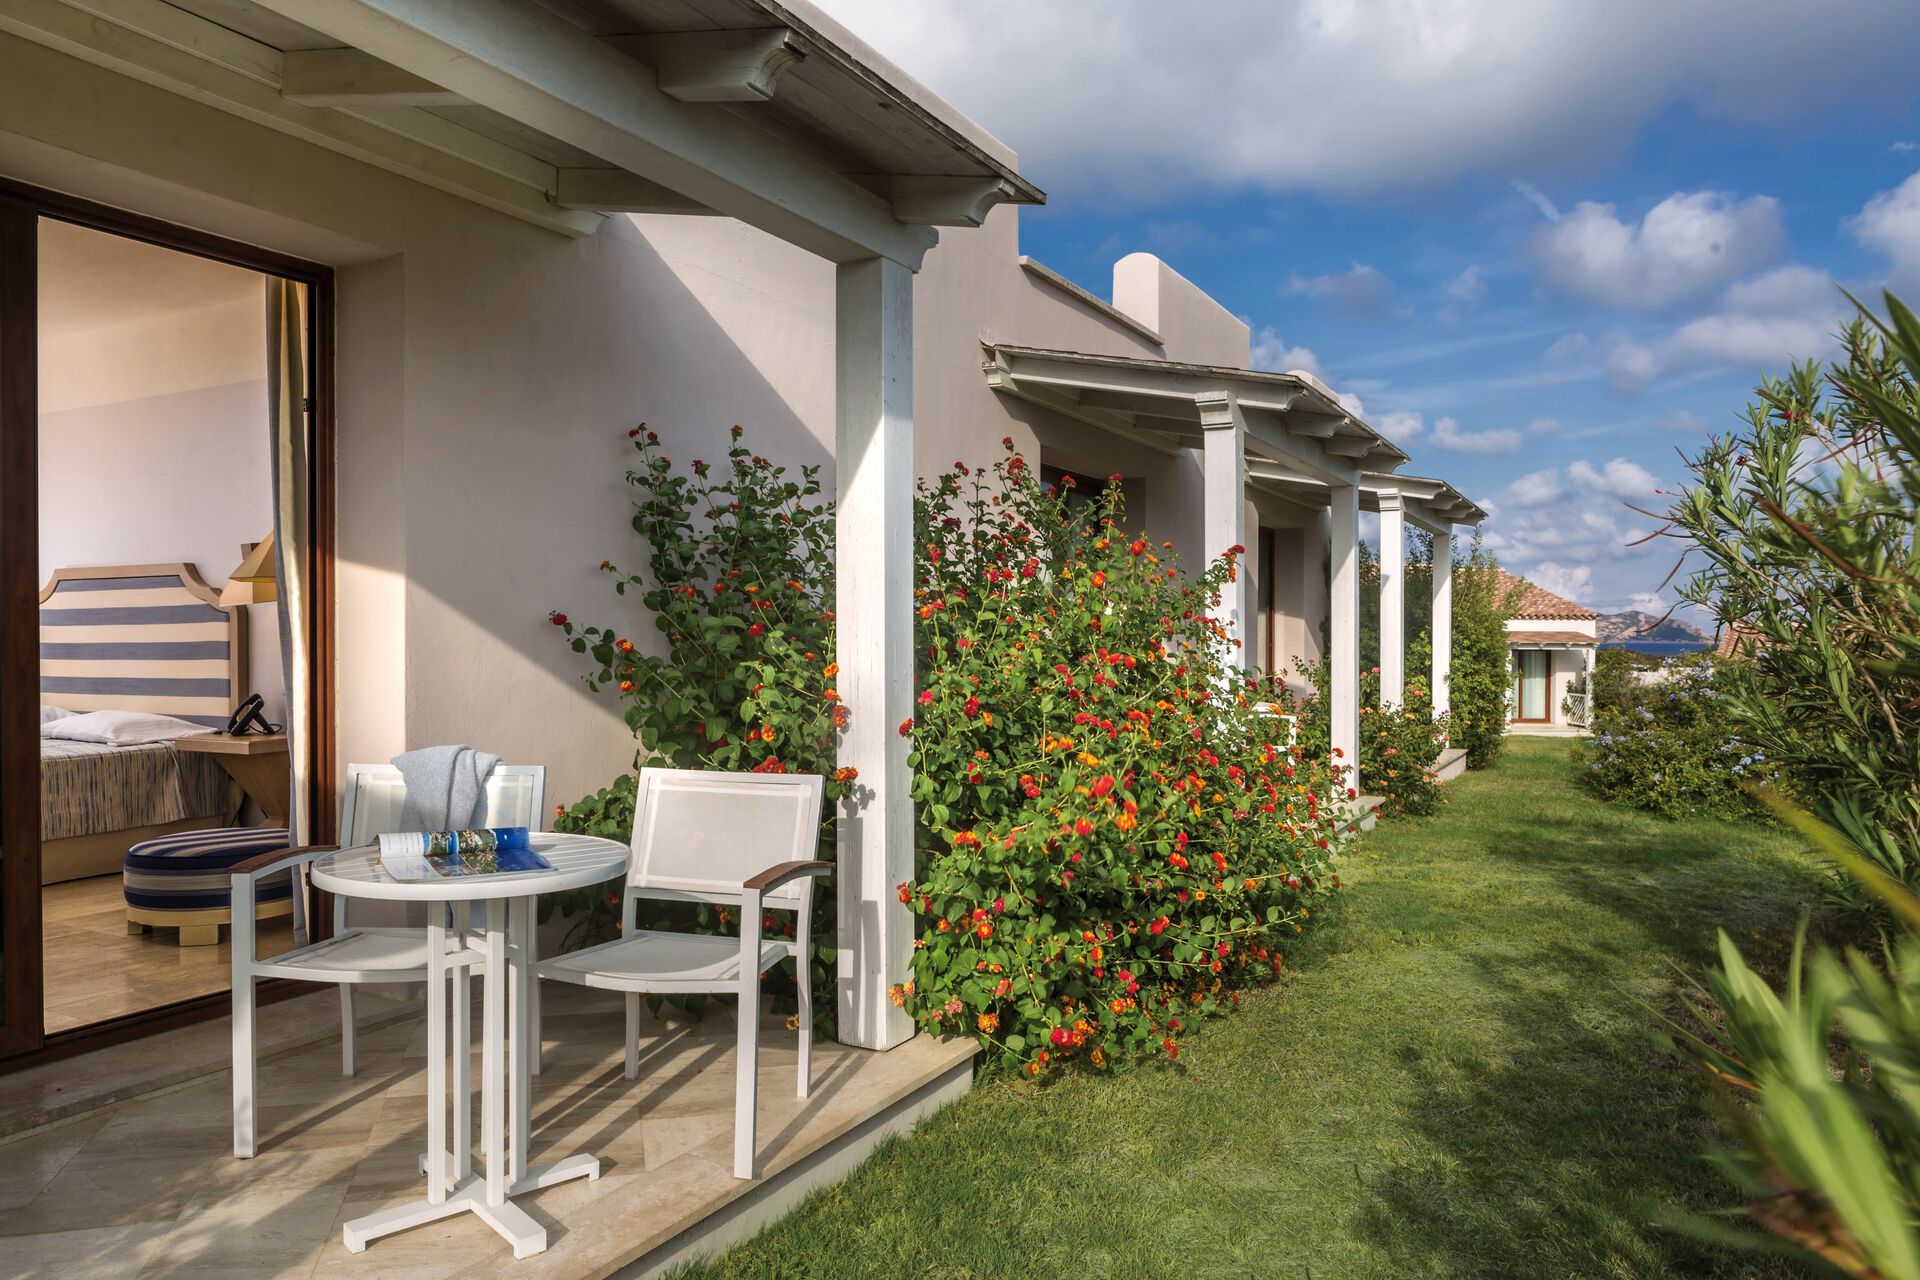 Italie - Sardaigne - Hôtel Grande Baia Resort & Spa Residence and Appartements 4*